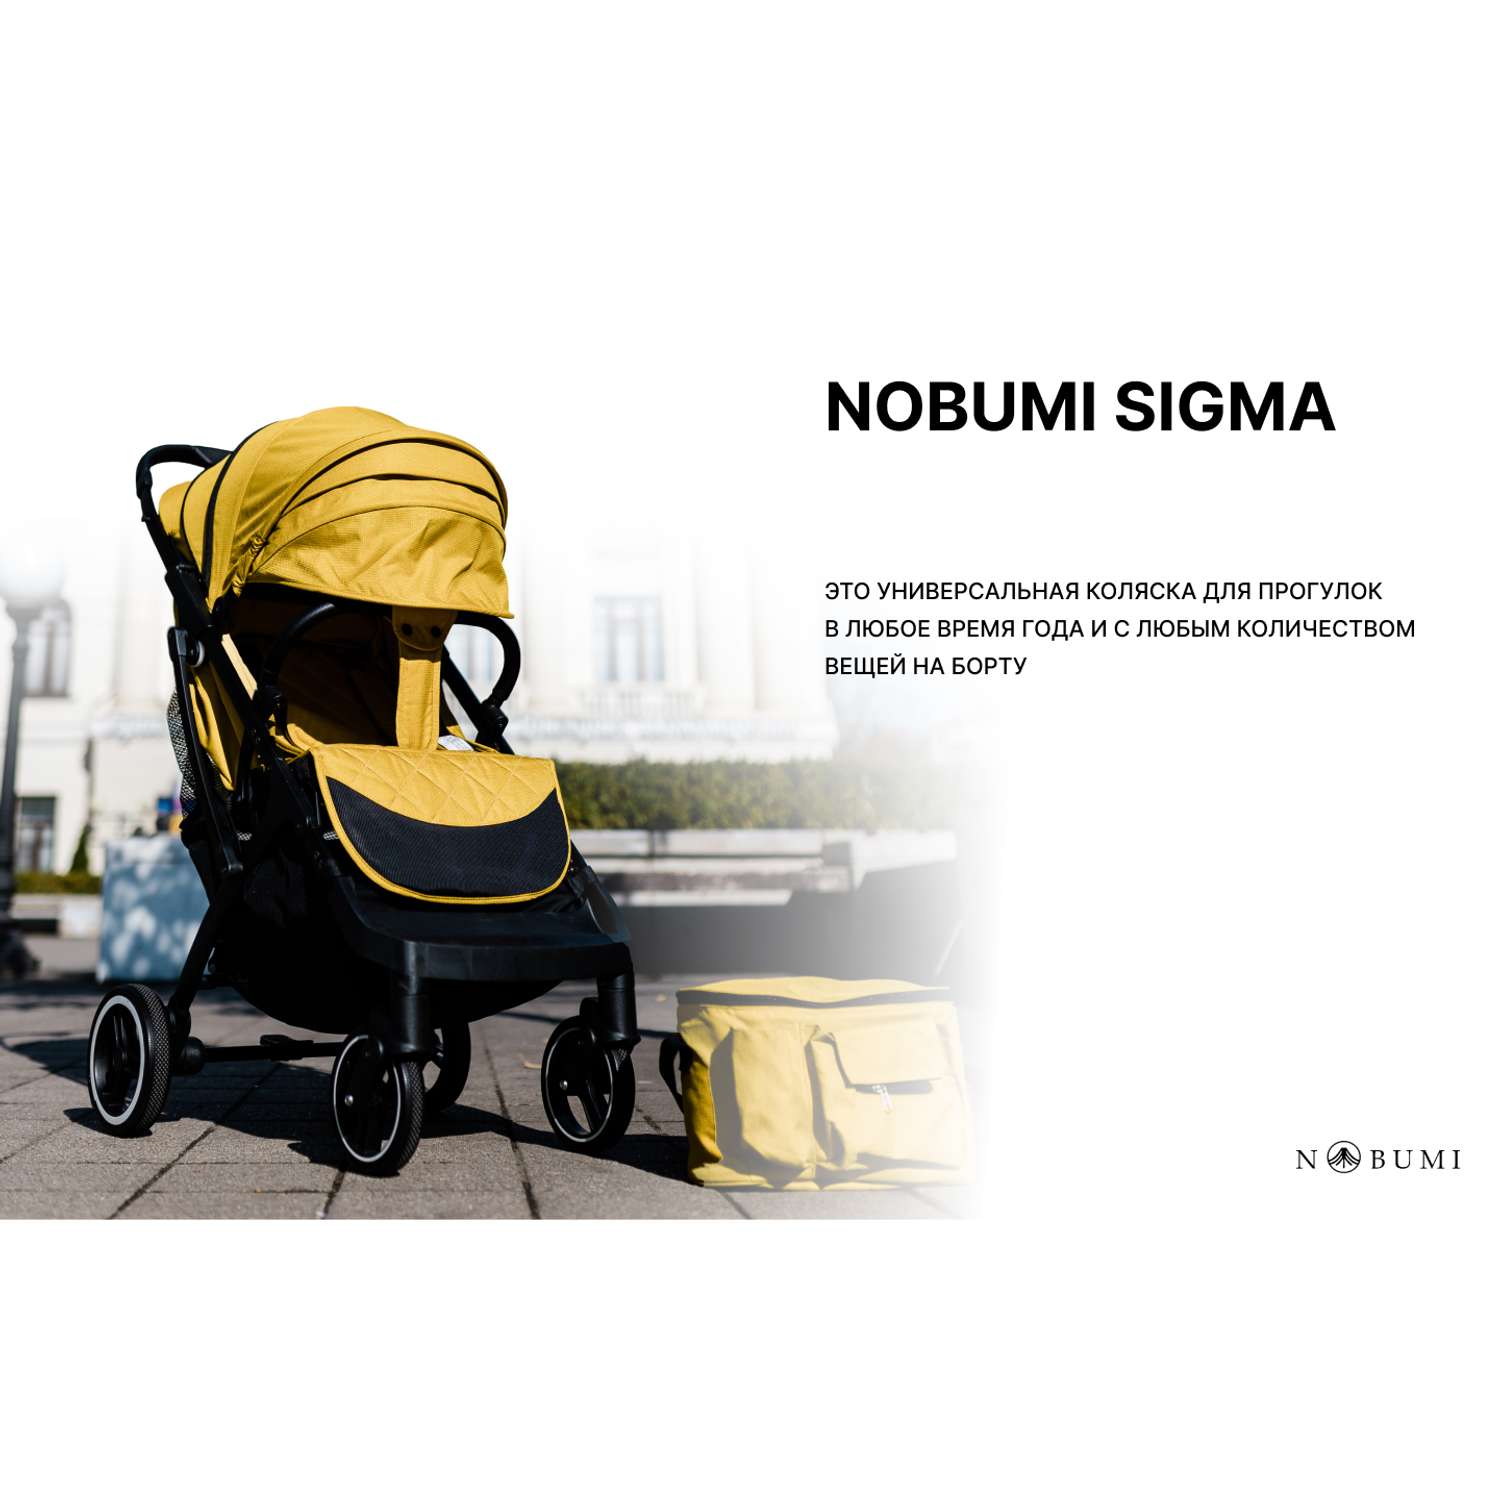 Коляска прогулочная Nobumi Sigma - фото 15